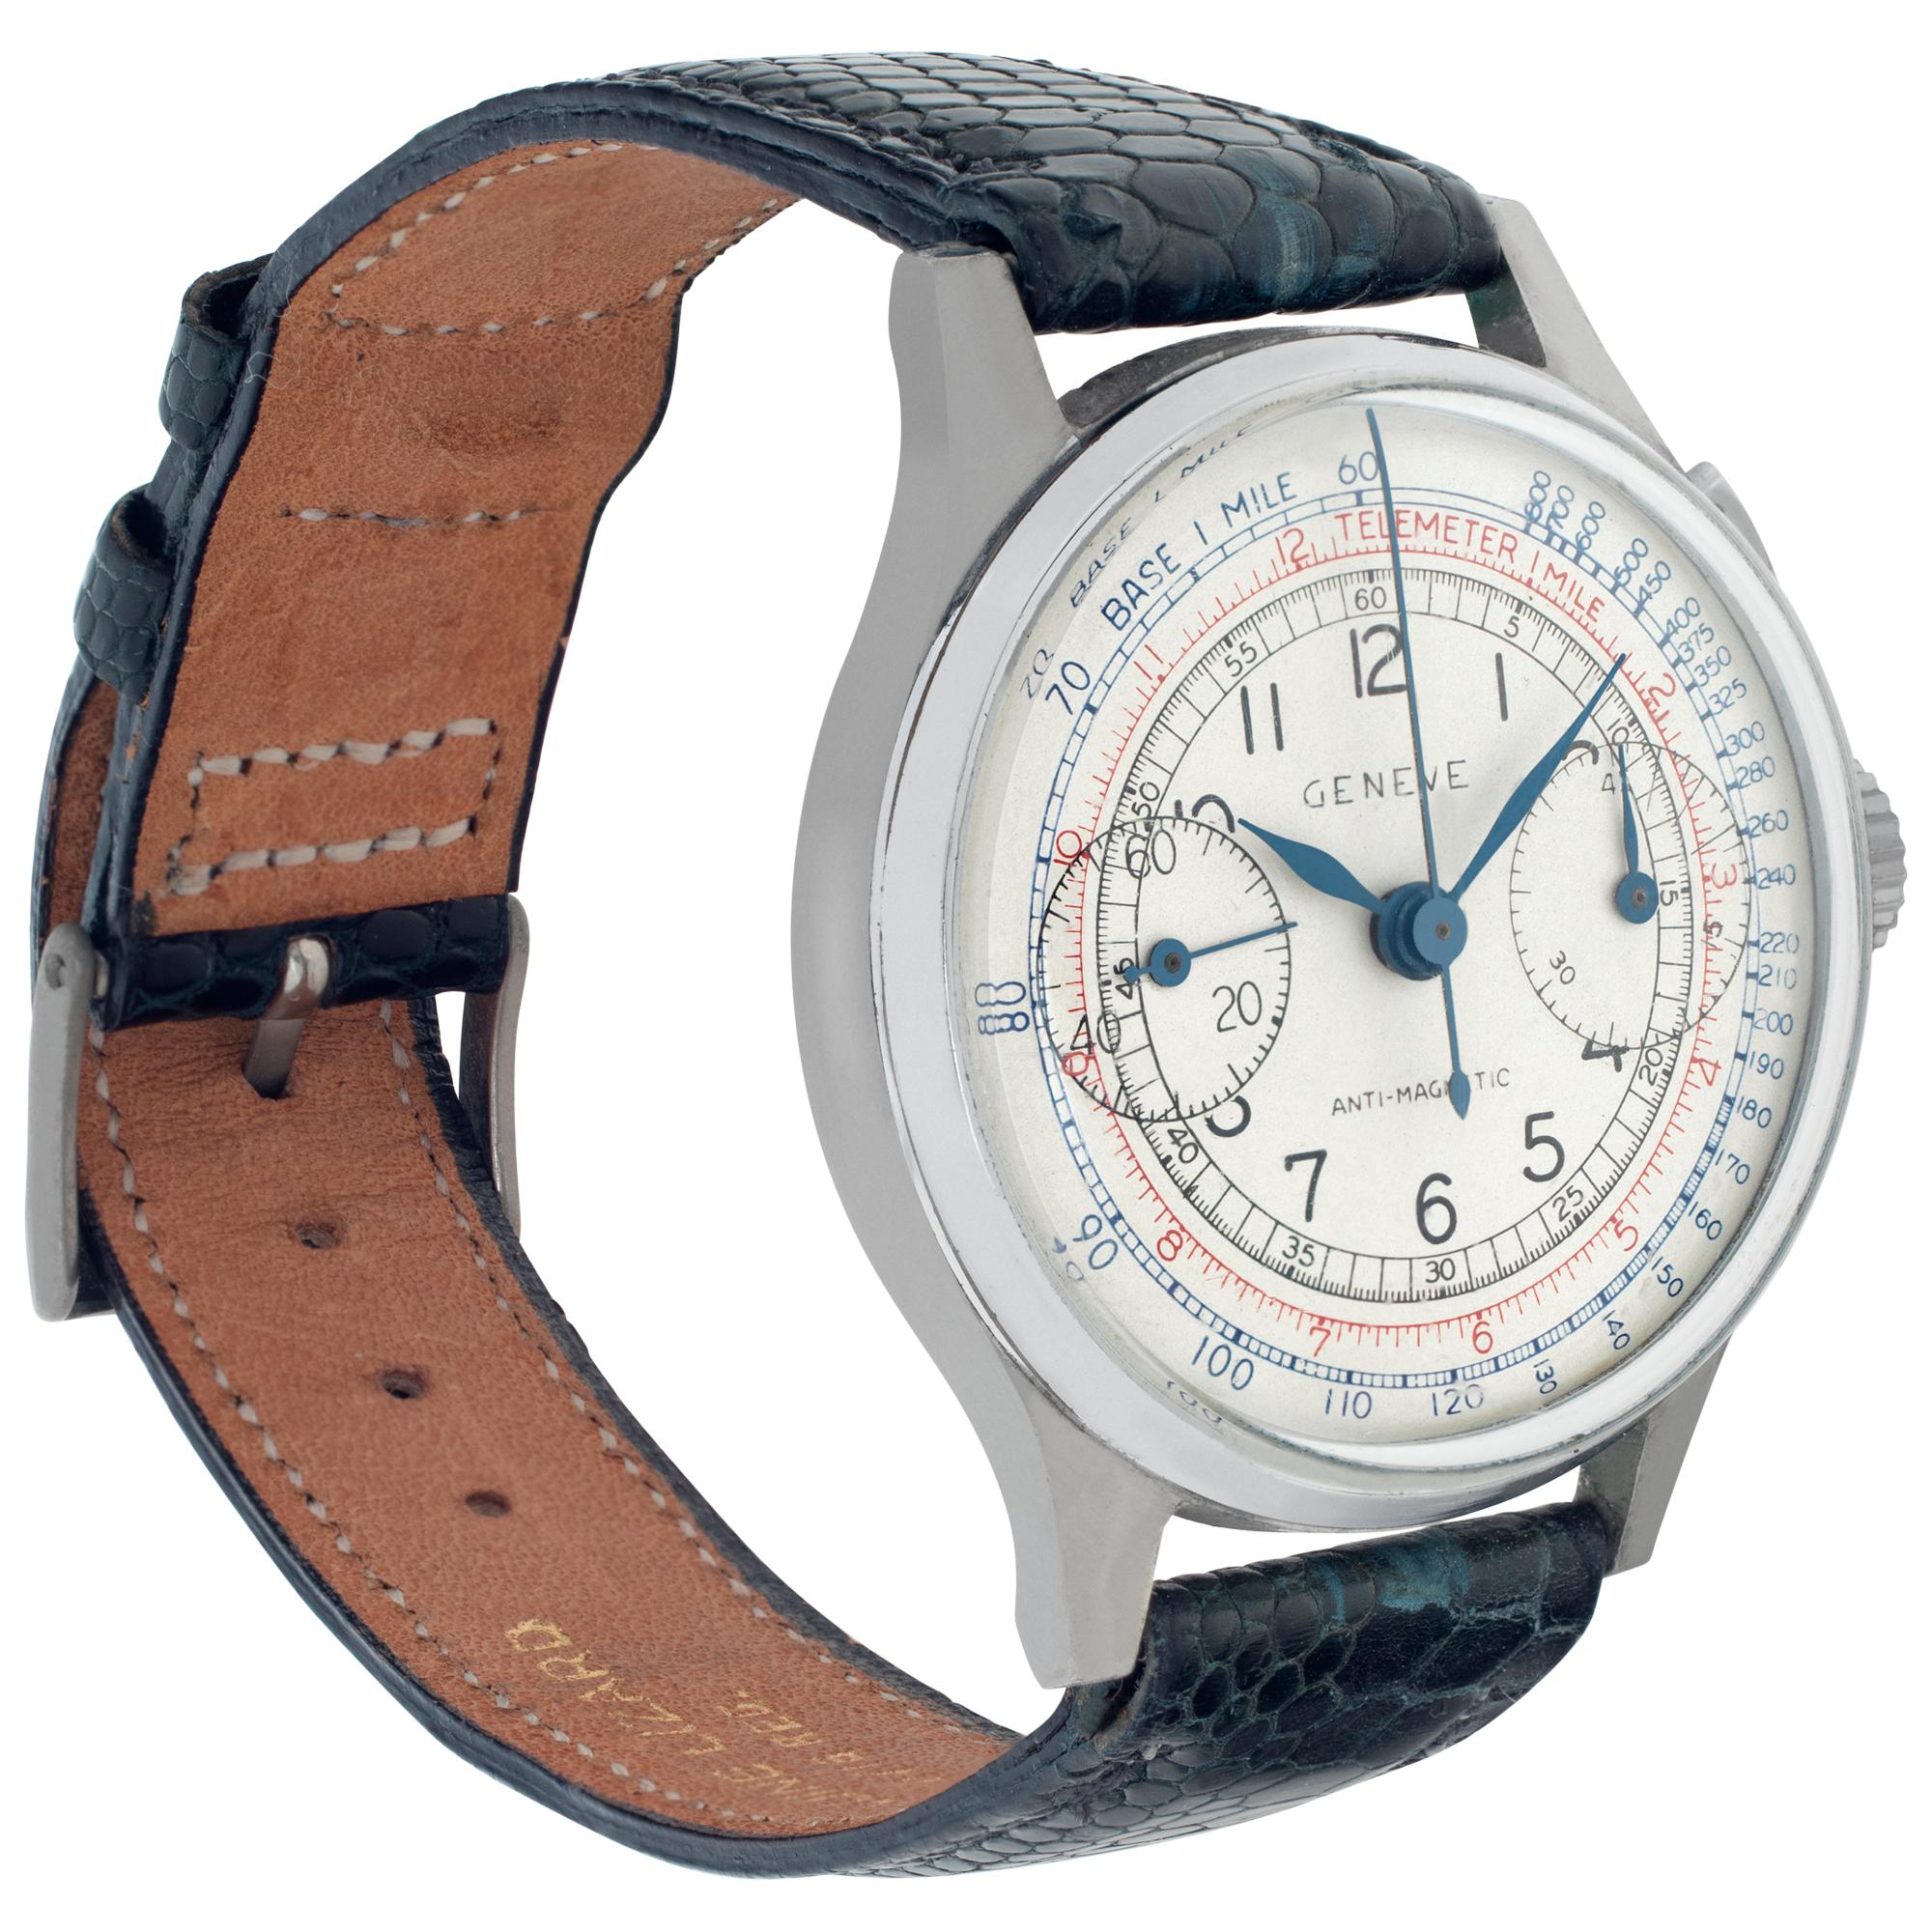 geneve watch price